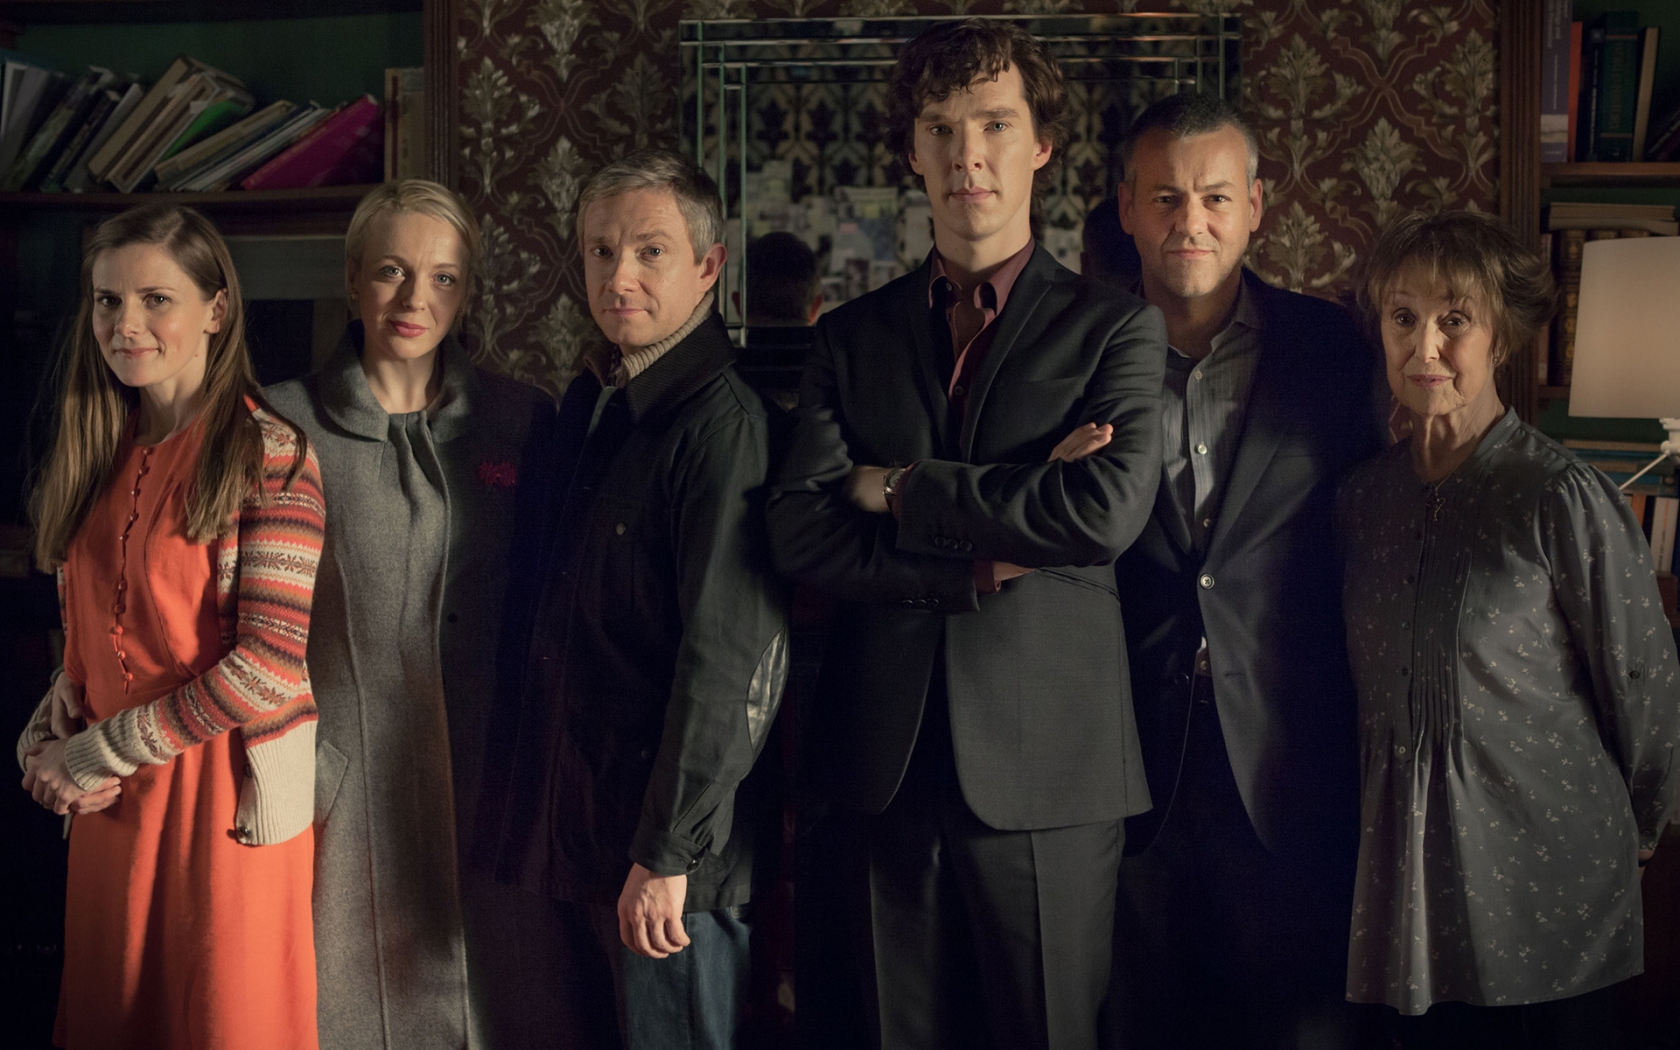 BBC Sherlock Cast for 1680 x 1050 widescreen resolution